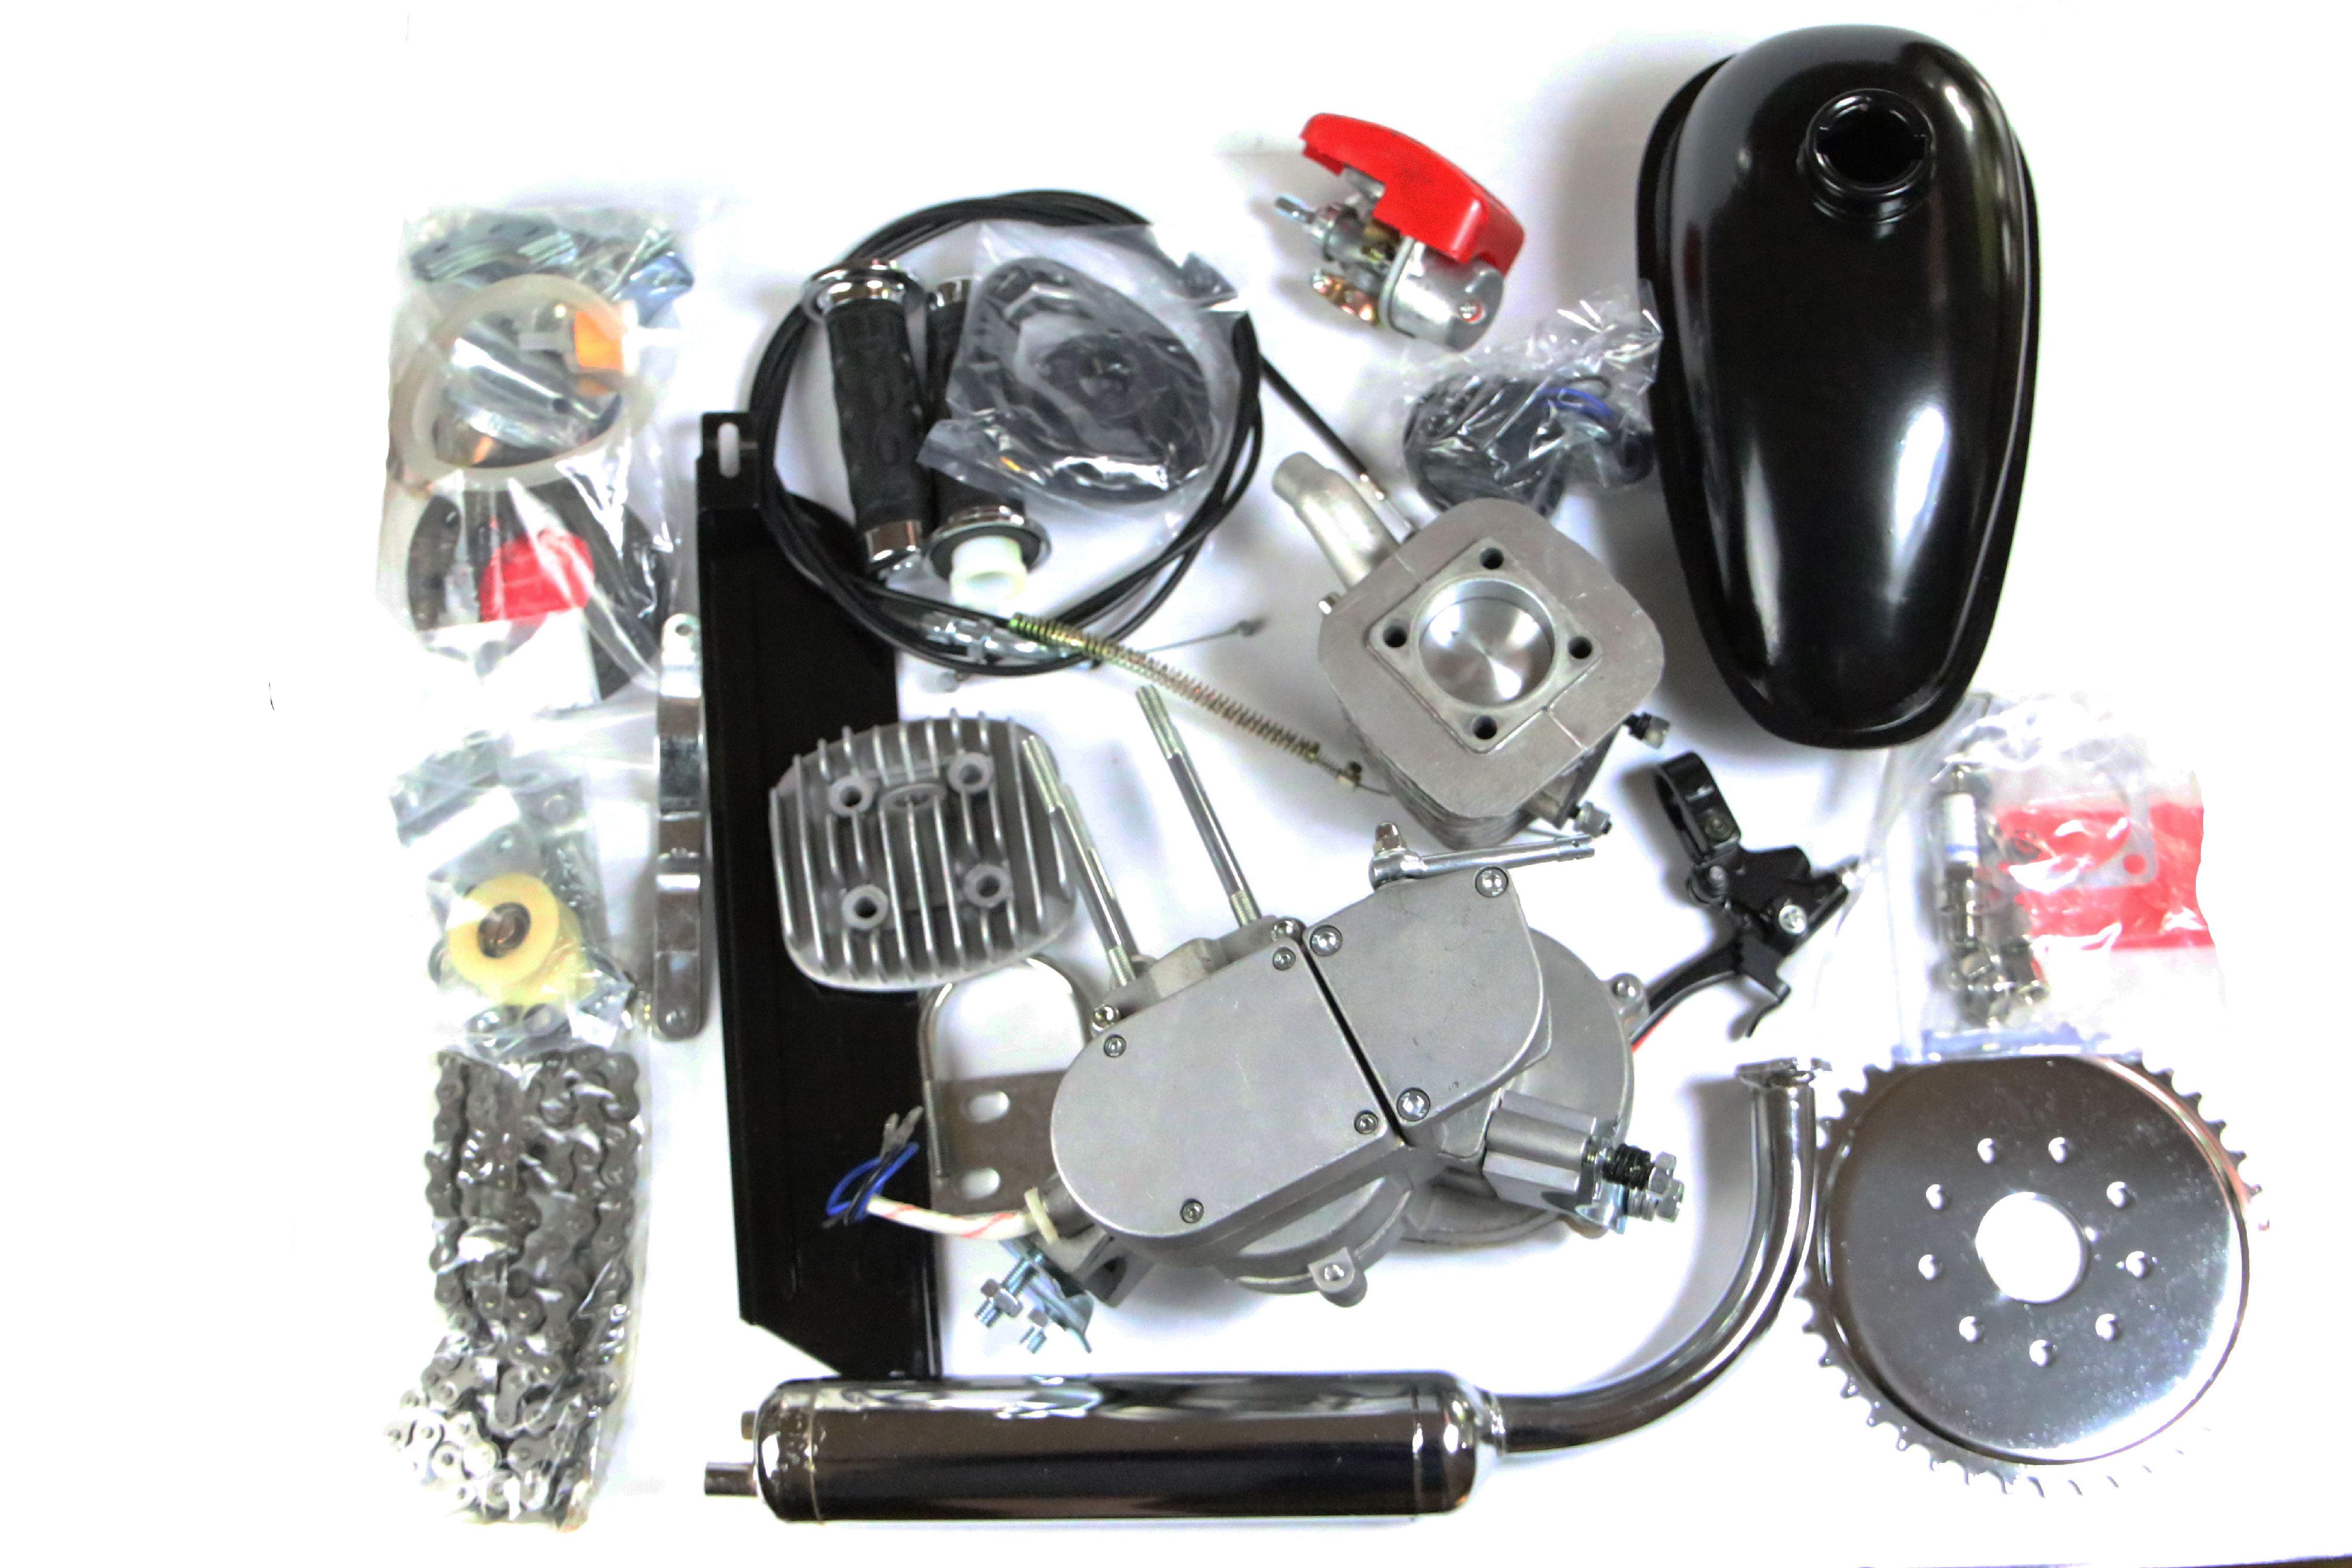 80cc bicycle motor kit Full Set Motorized 2 Stroke Petrol Gas Motor Engine Kits 